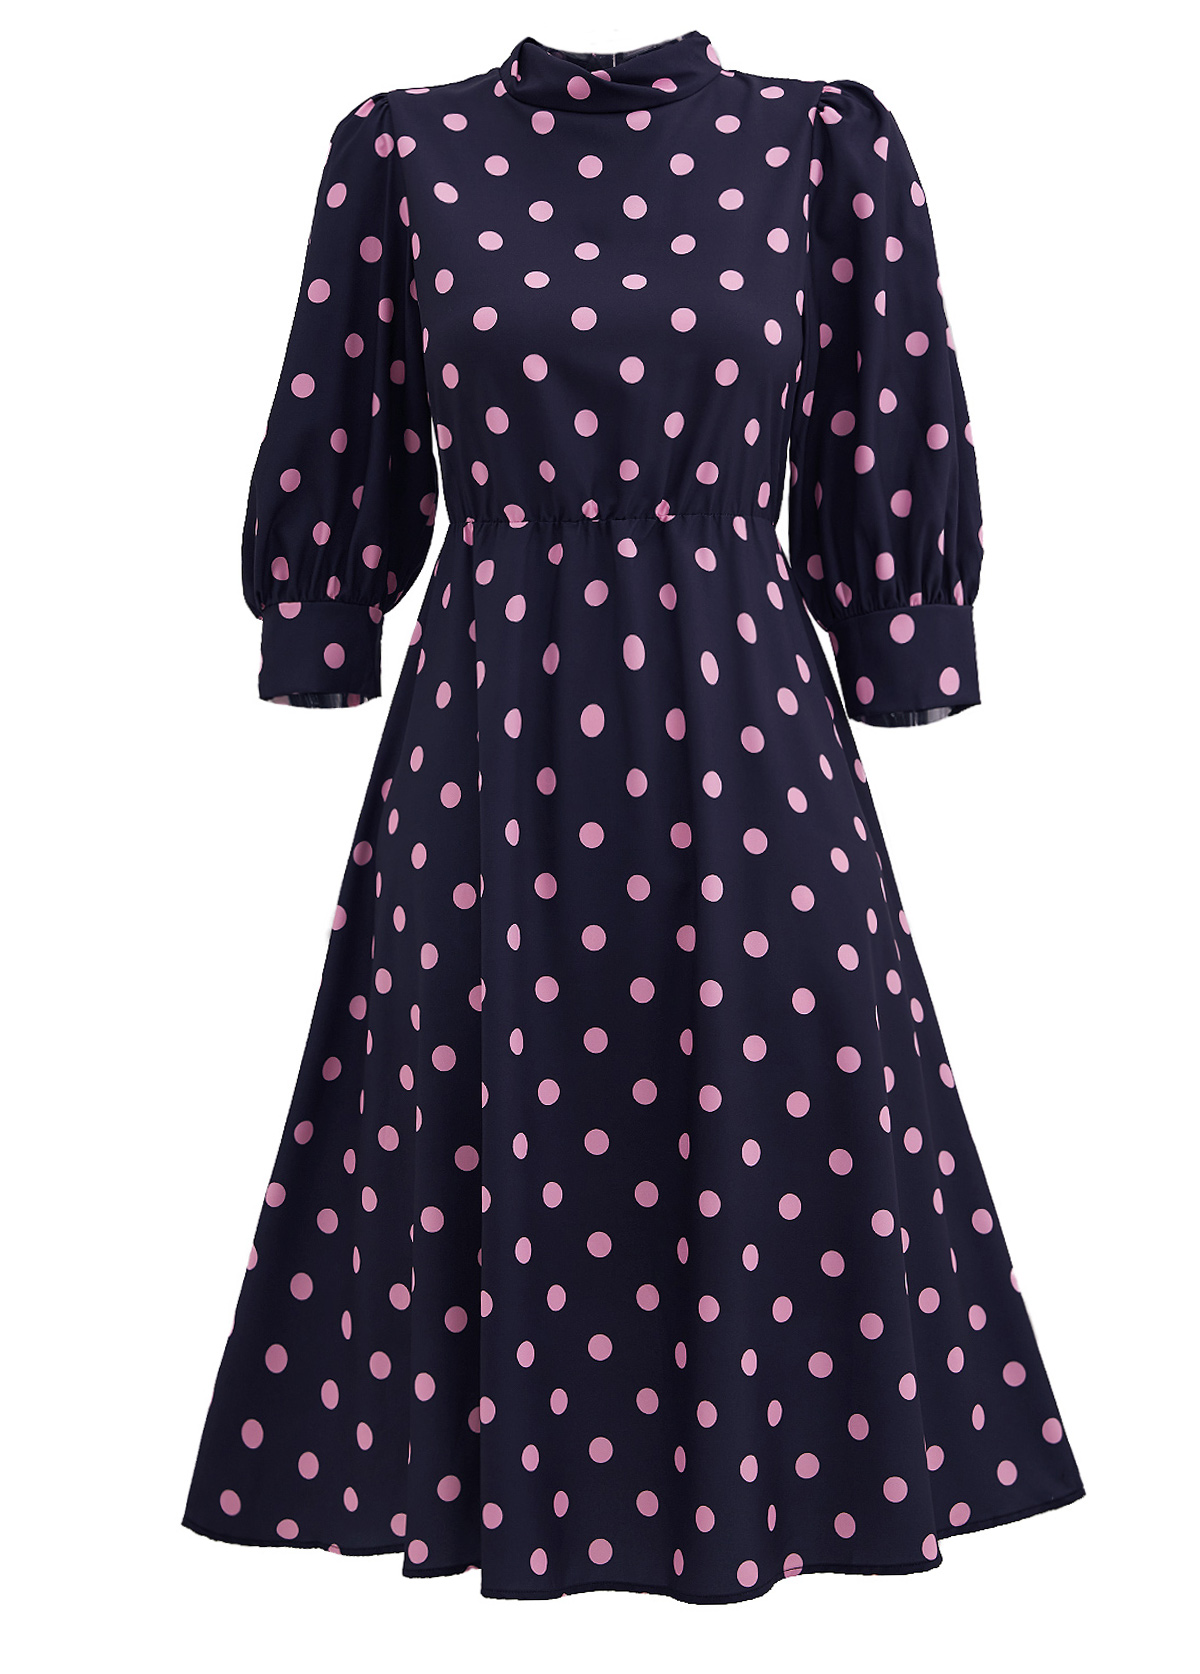 Polka Dot Cut Out Black Stand Collar Dress